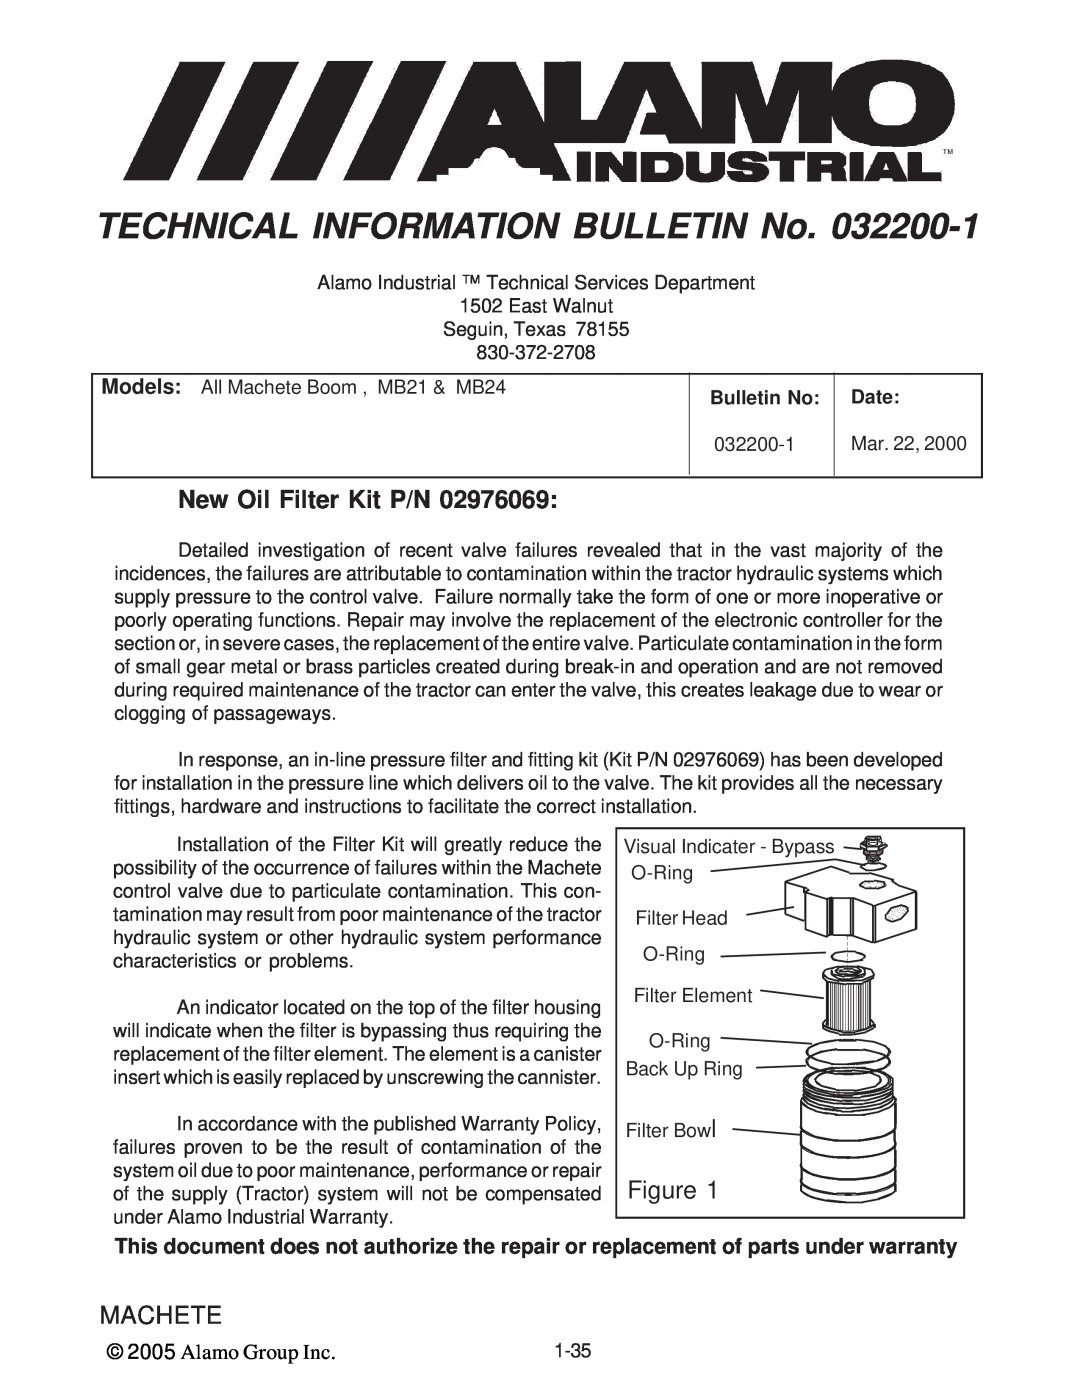 Alamo T 7740 New Oil Filter Kit P/N, TECHNICAL INFORMATION BULLETIN No, Figure, Machete, Alamo Group Inc, Bulletin No 